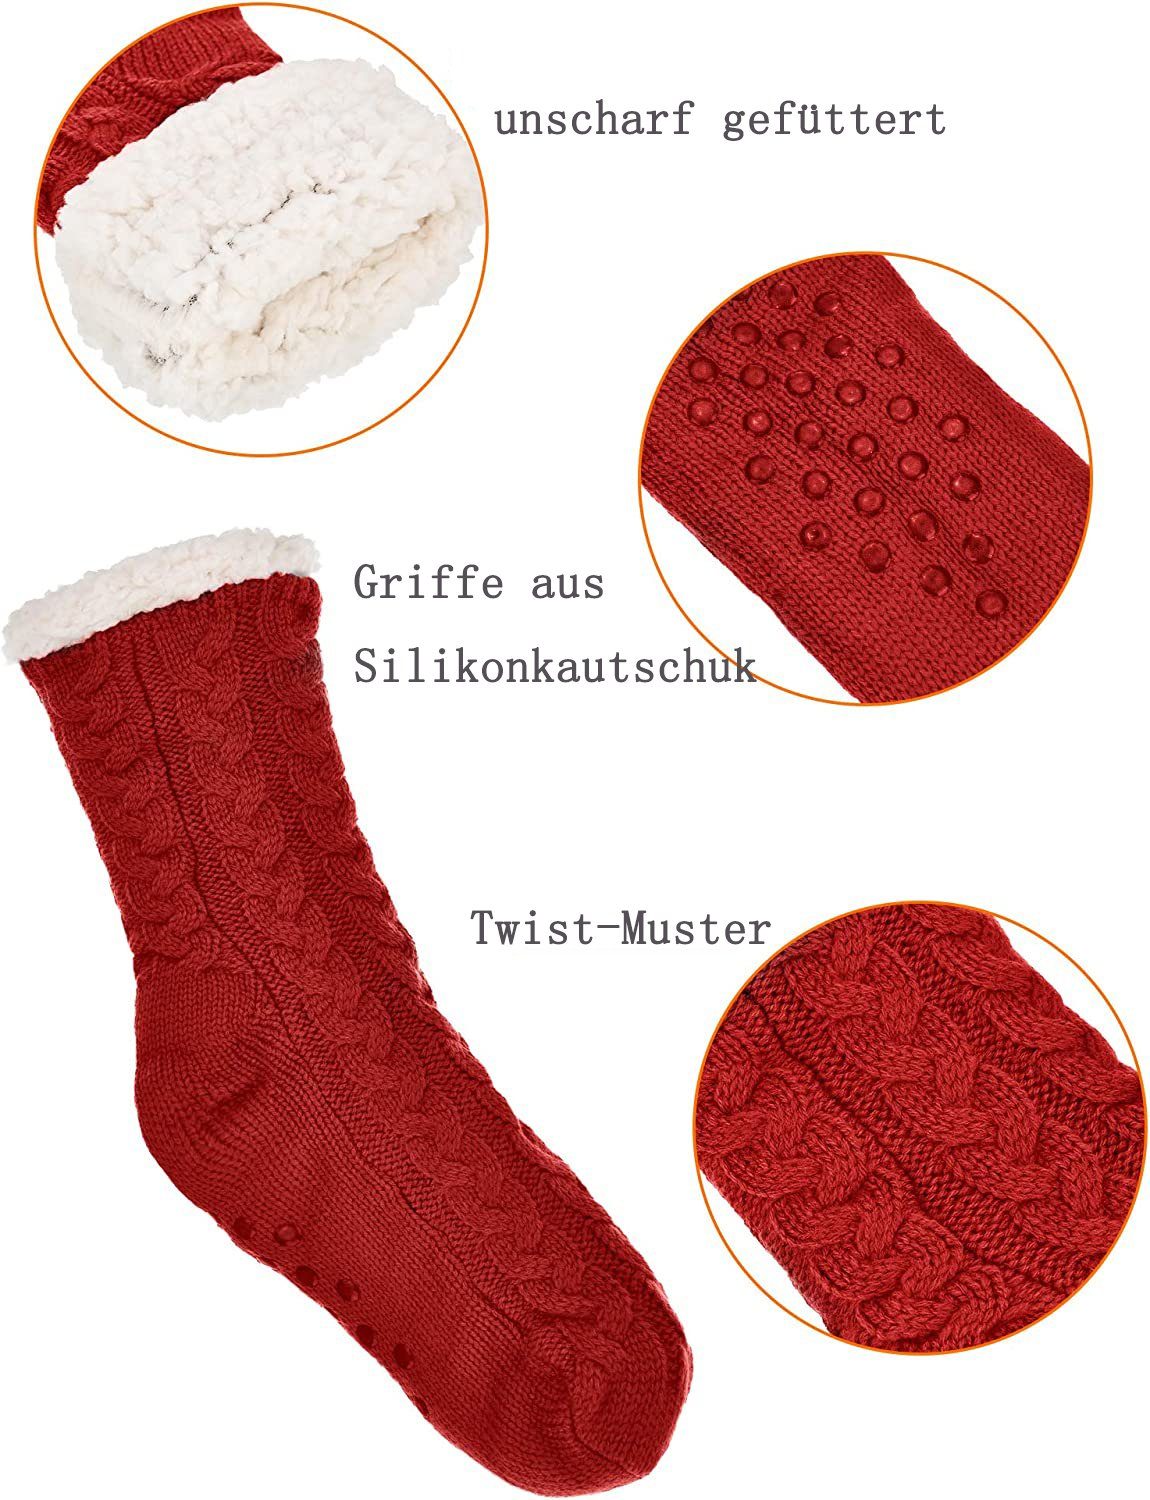 Damen Socken Weihnachten grau GelldG rot + Socken Warme Paar Fuzzy 2 Pantoffel Thermosocken